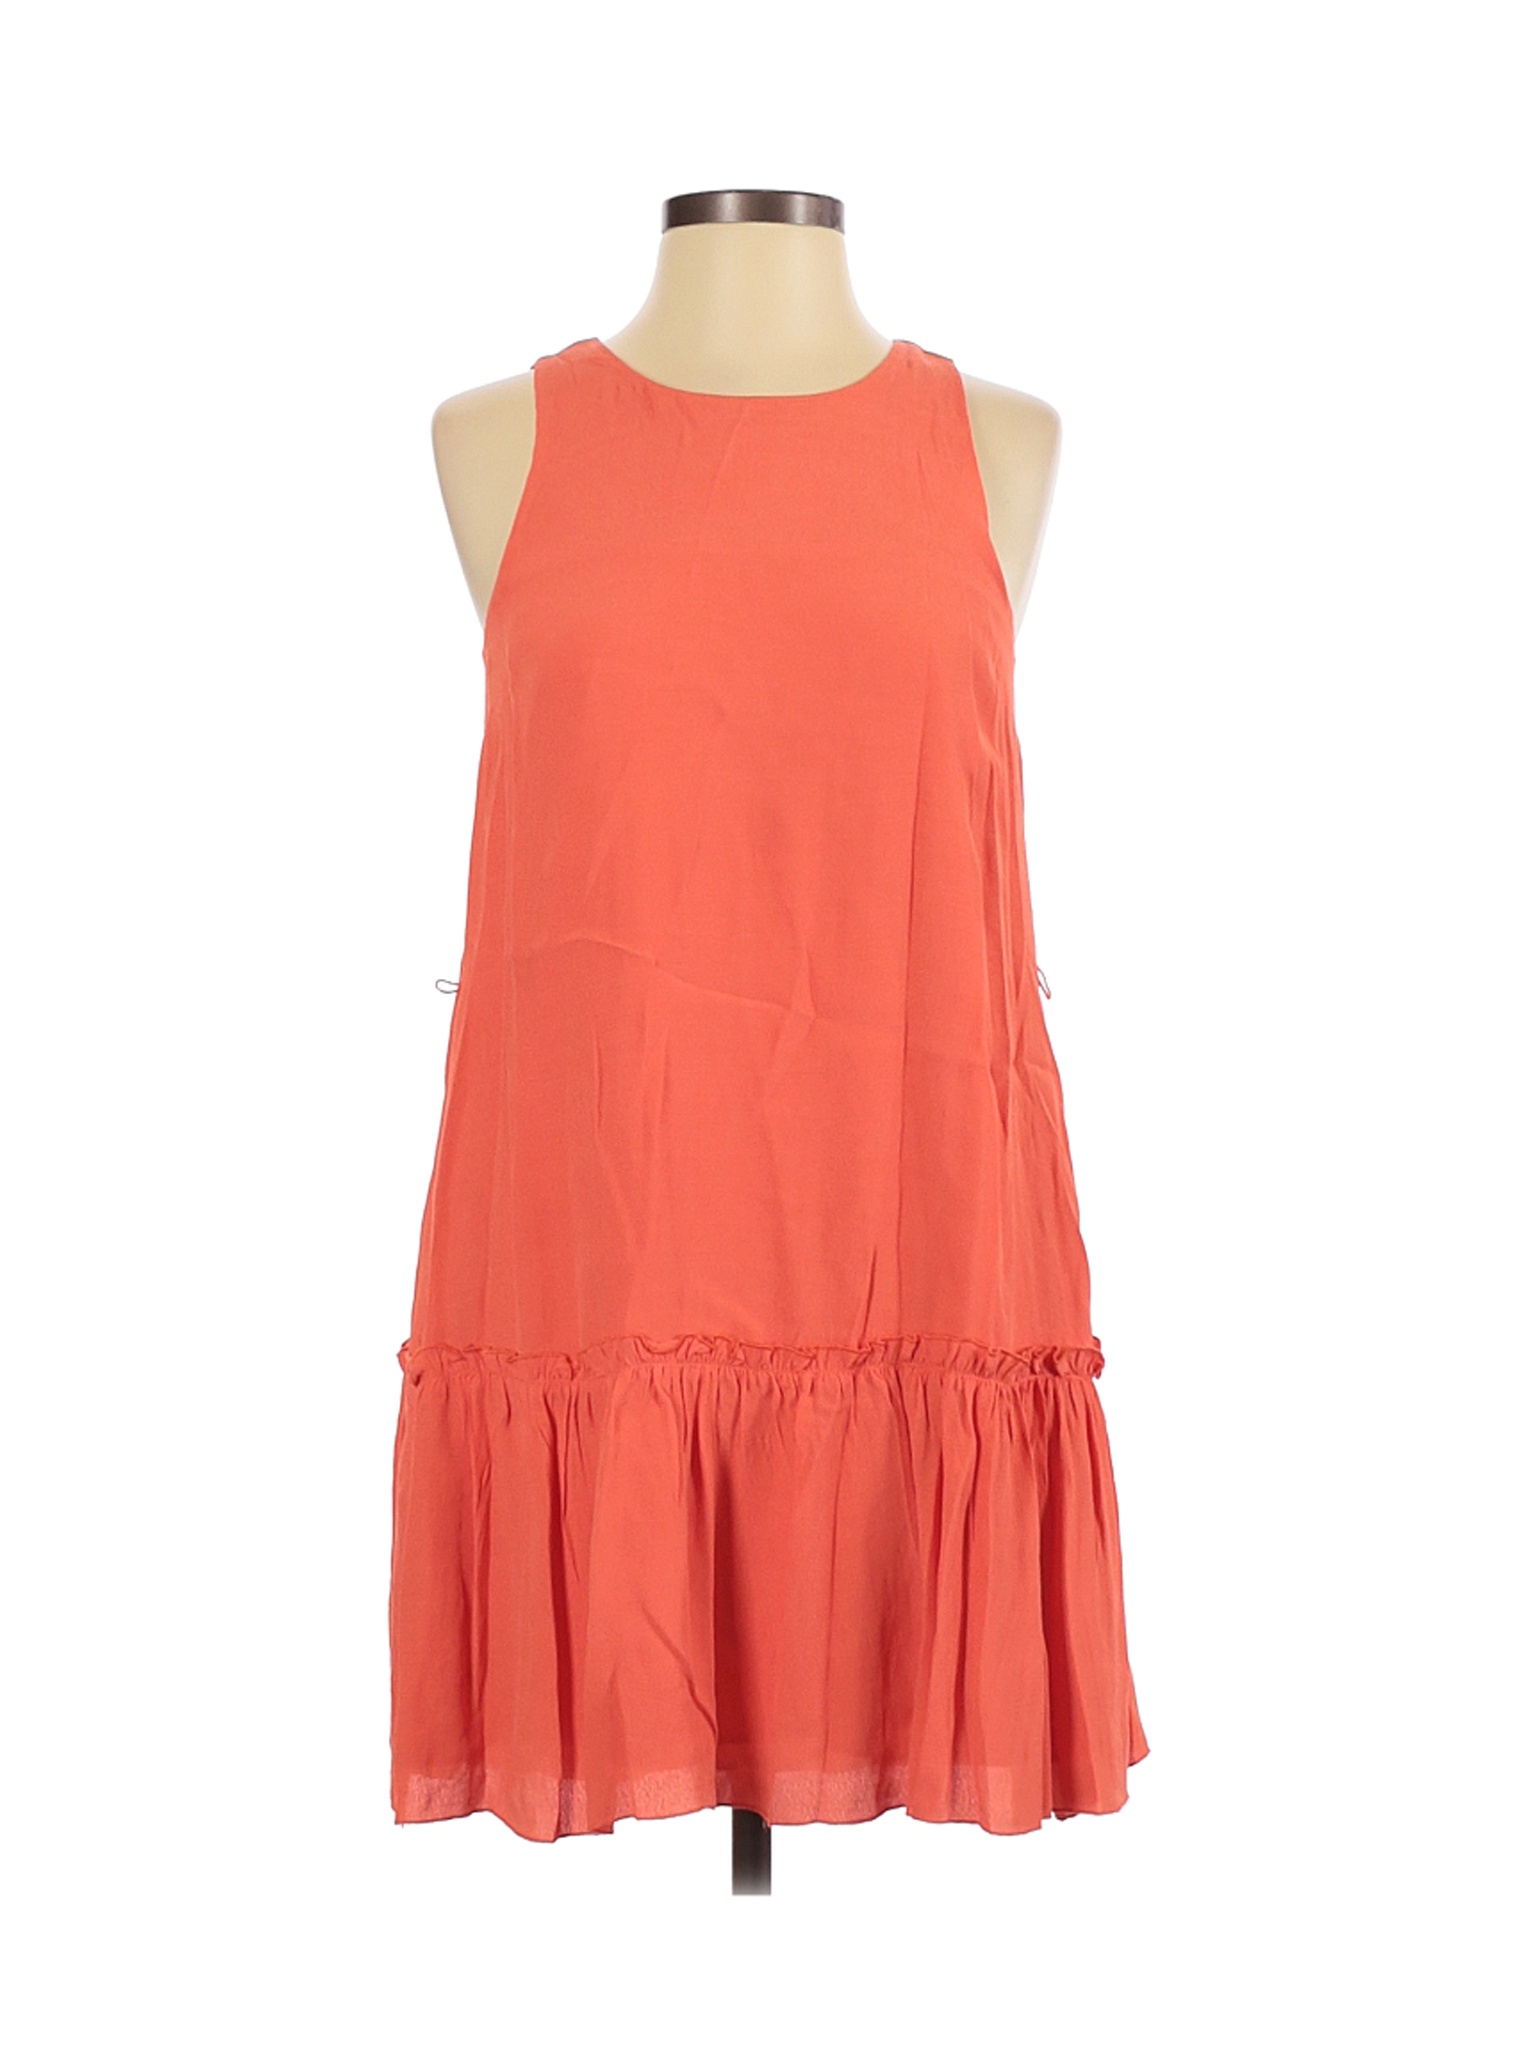 Banana Republic Women Orange Casual Dress 0 | eBay